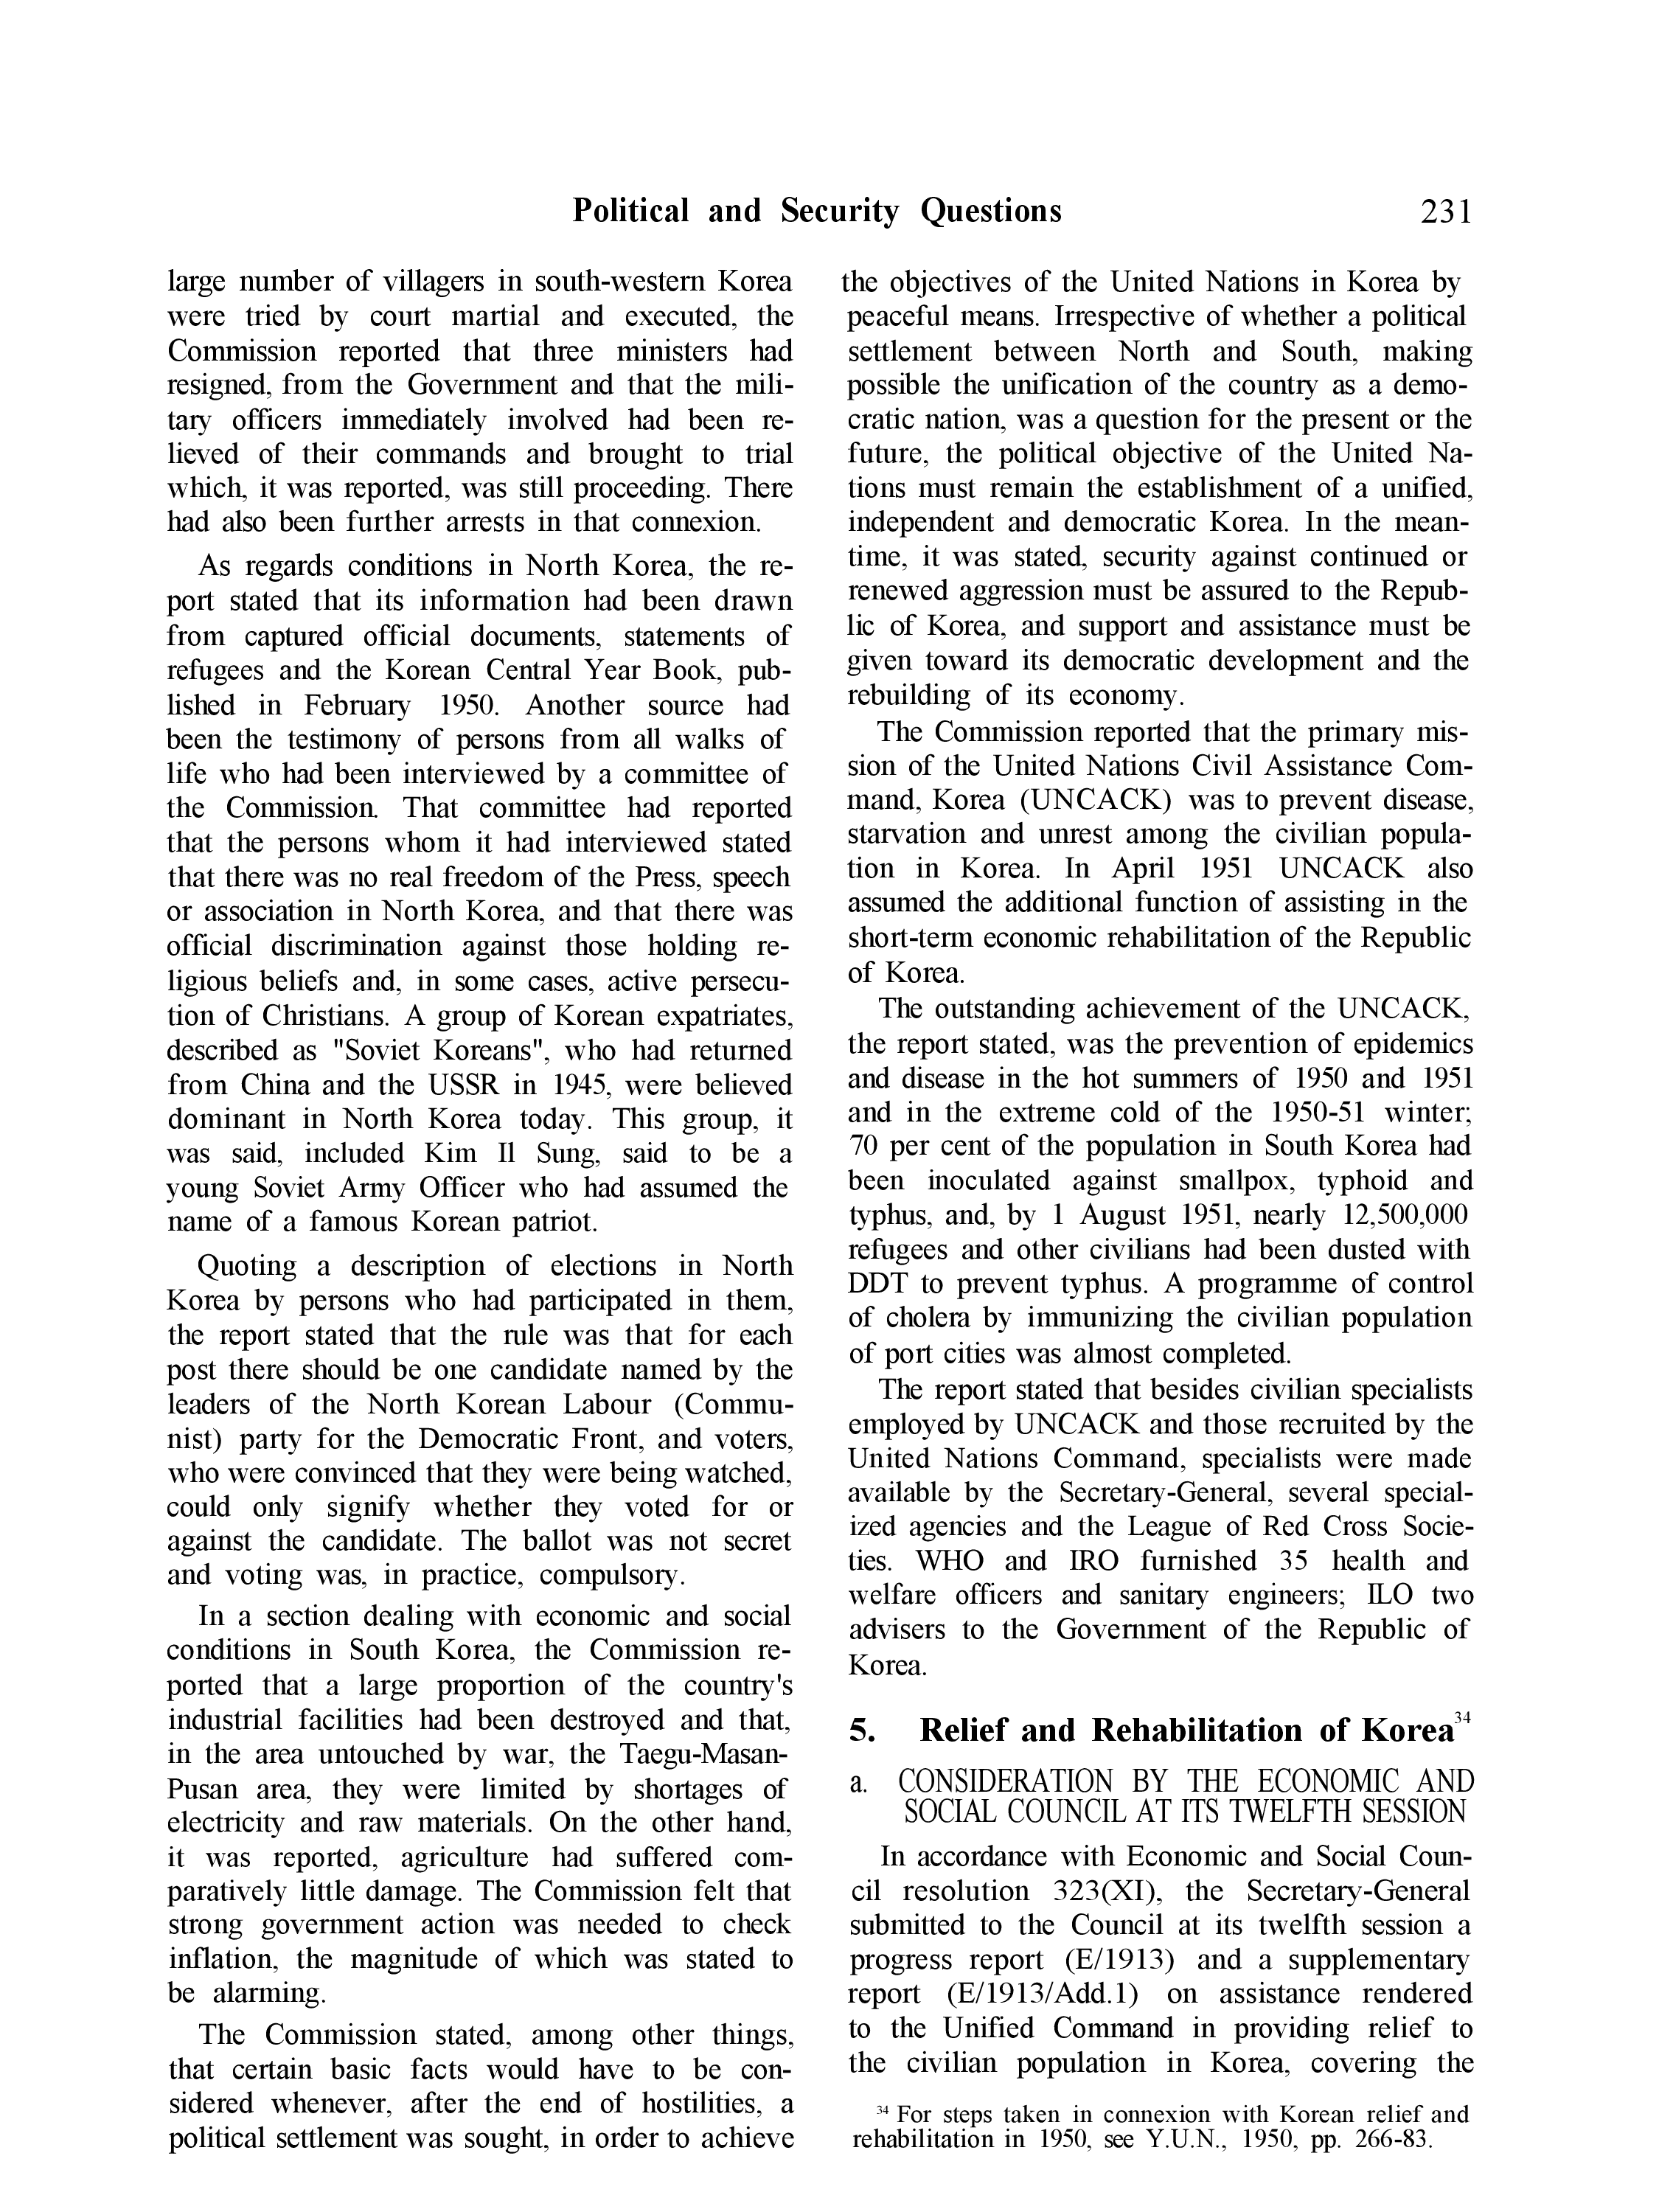 YUN Volume_Page 1951_241